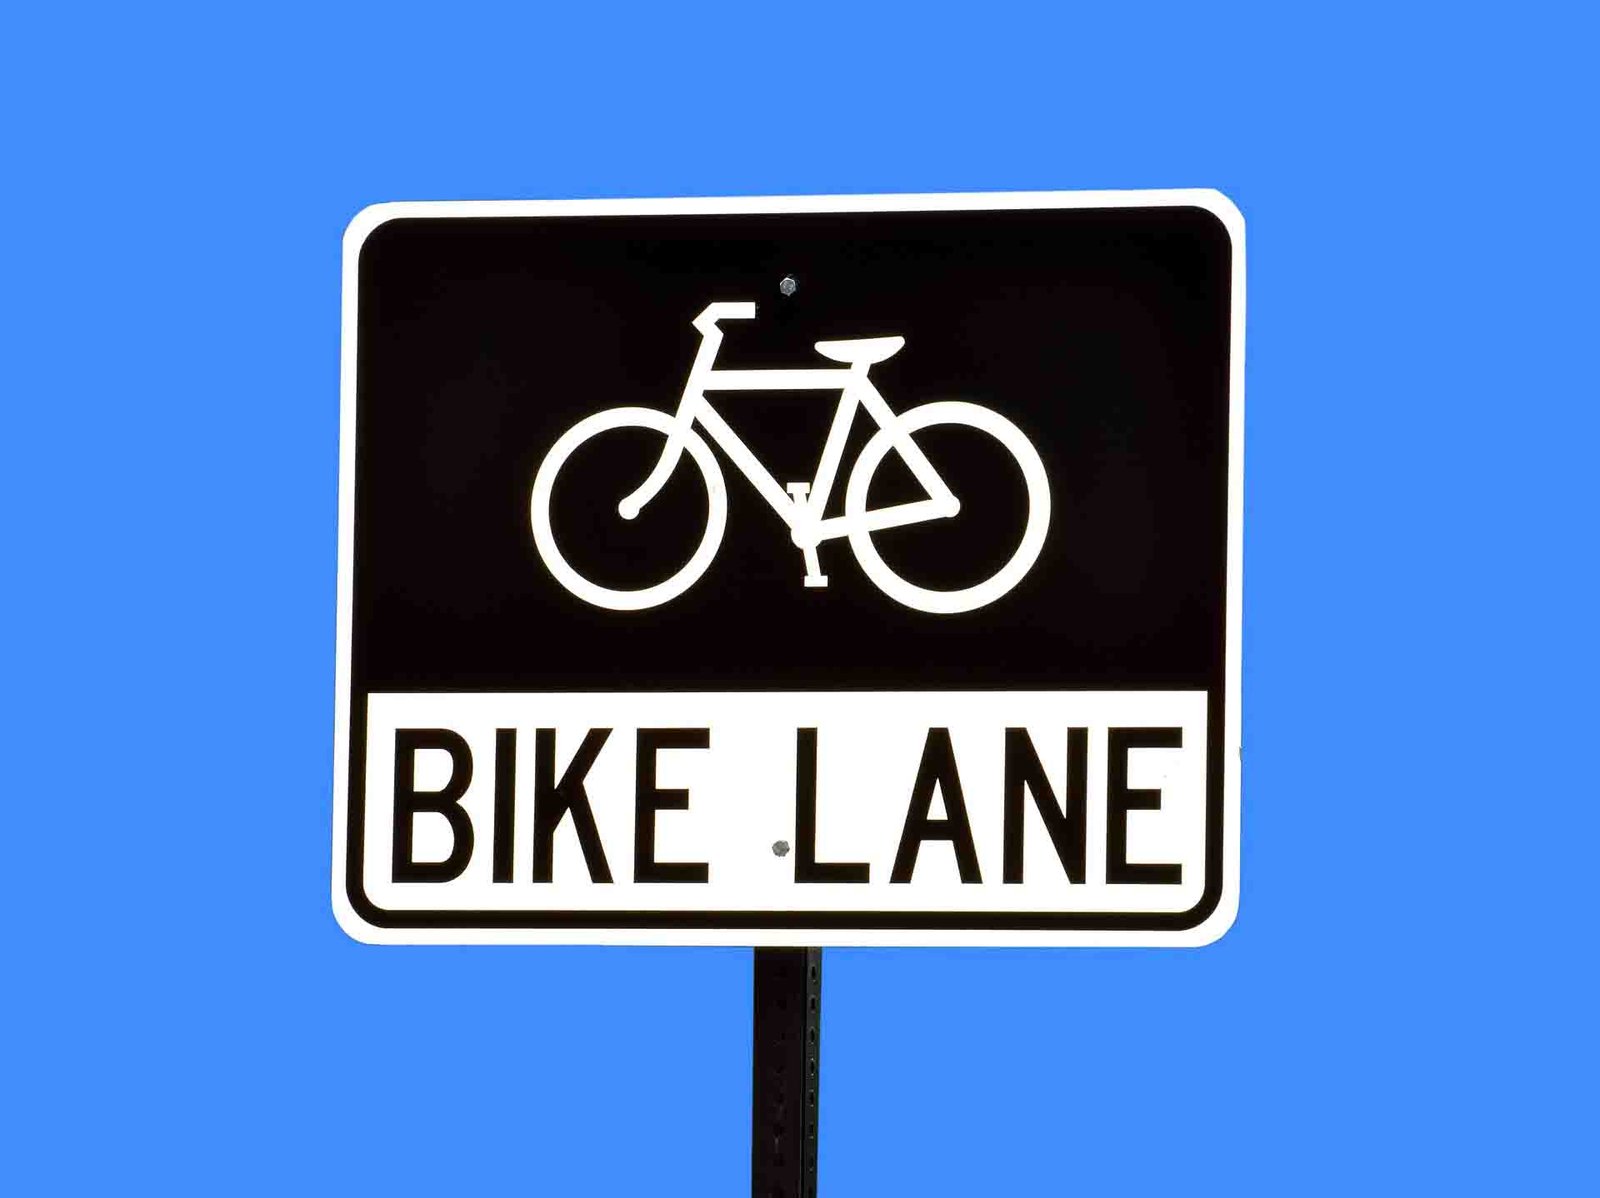 Una señal de carril bici en inglés